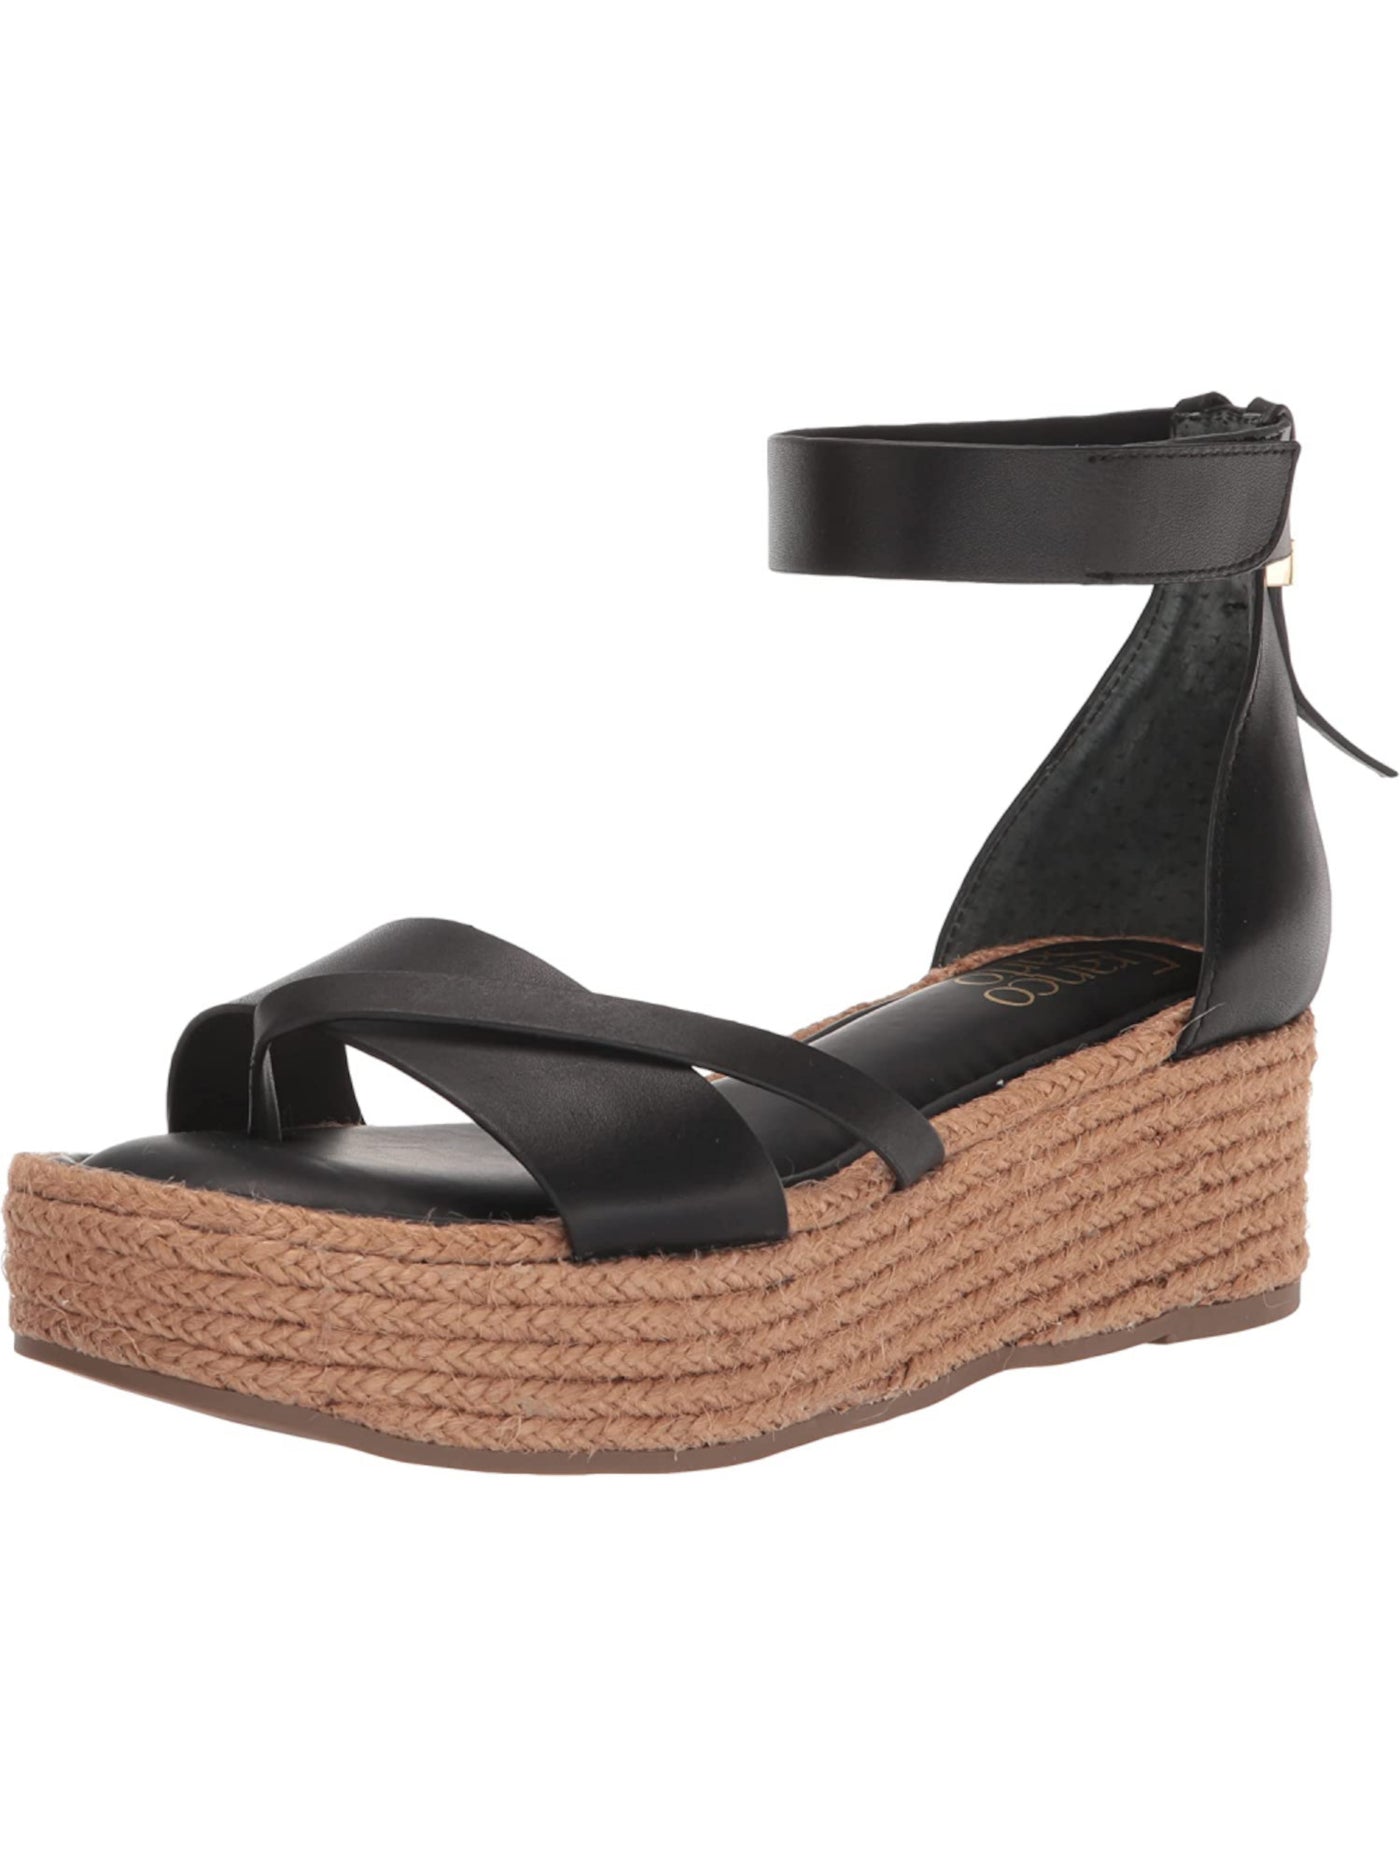 FRANCO SARTO Womens Black 1-1/2" Platform Ankle Strap Cushioned Verita Round Toe Wedge Leather Espadrille Shoes 9.5 M